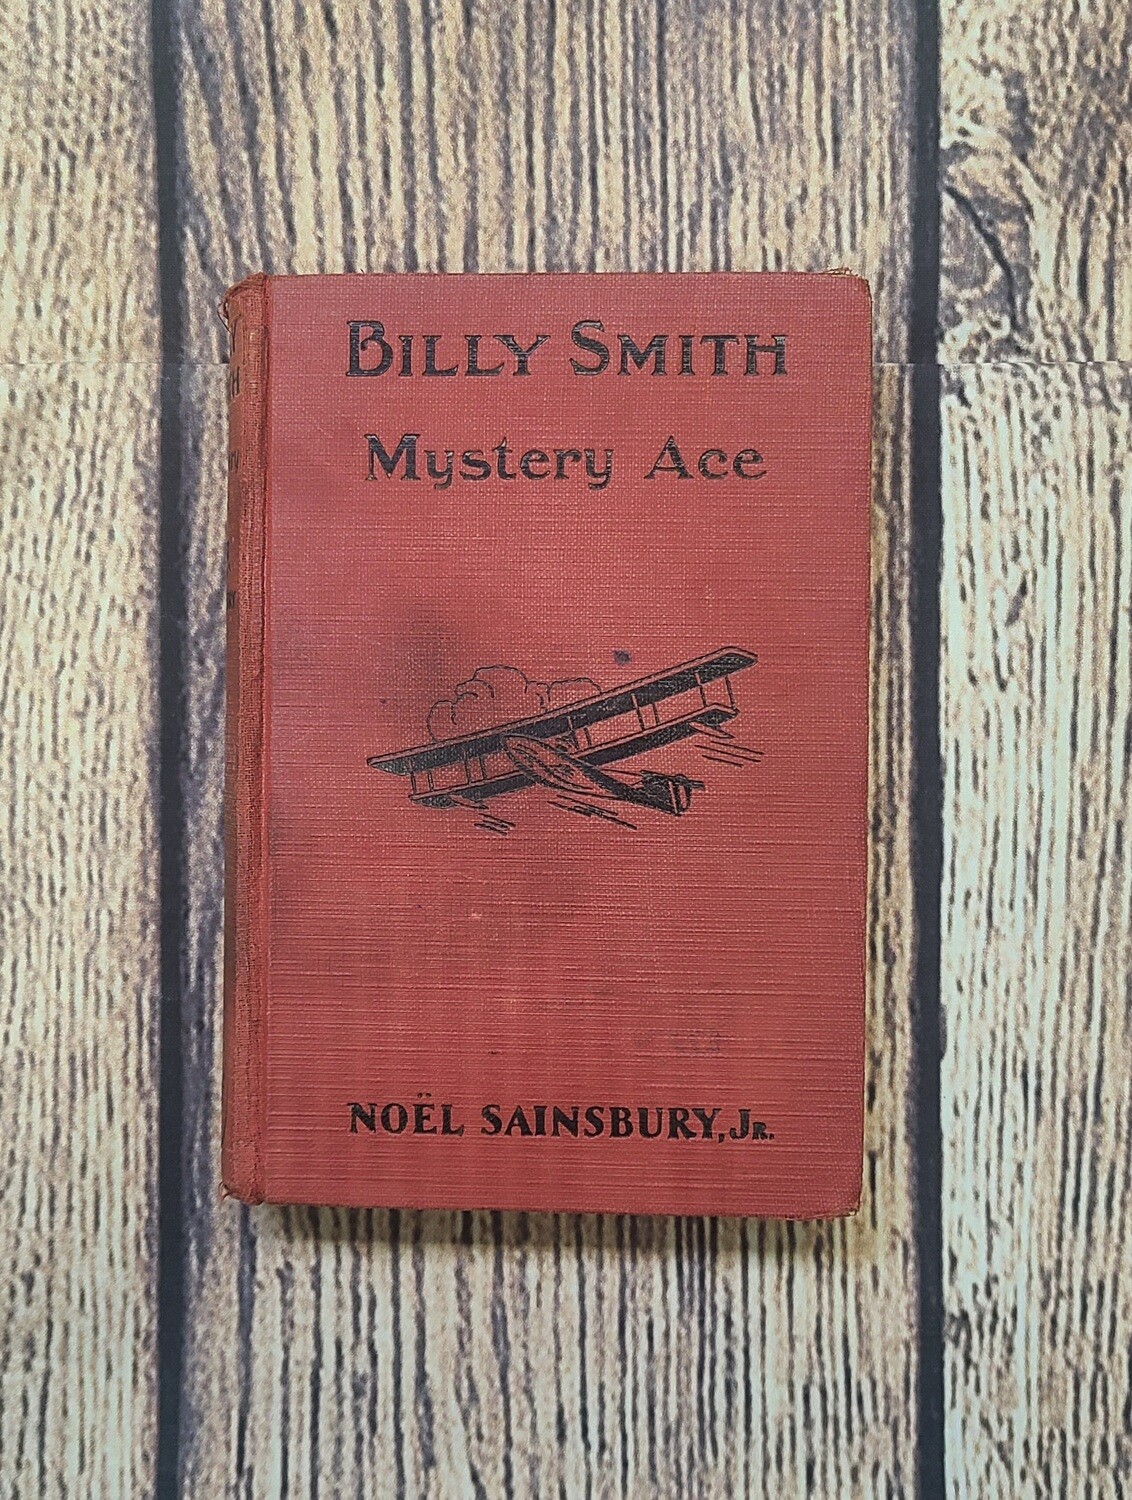 Billy Smith: Mystery Ace by Noel Sainsbury, Jr.